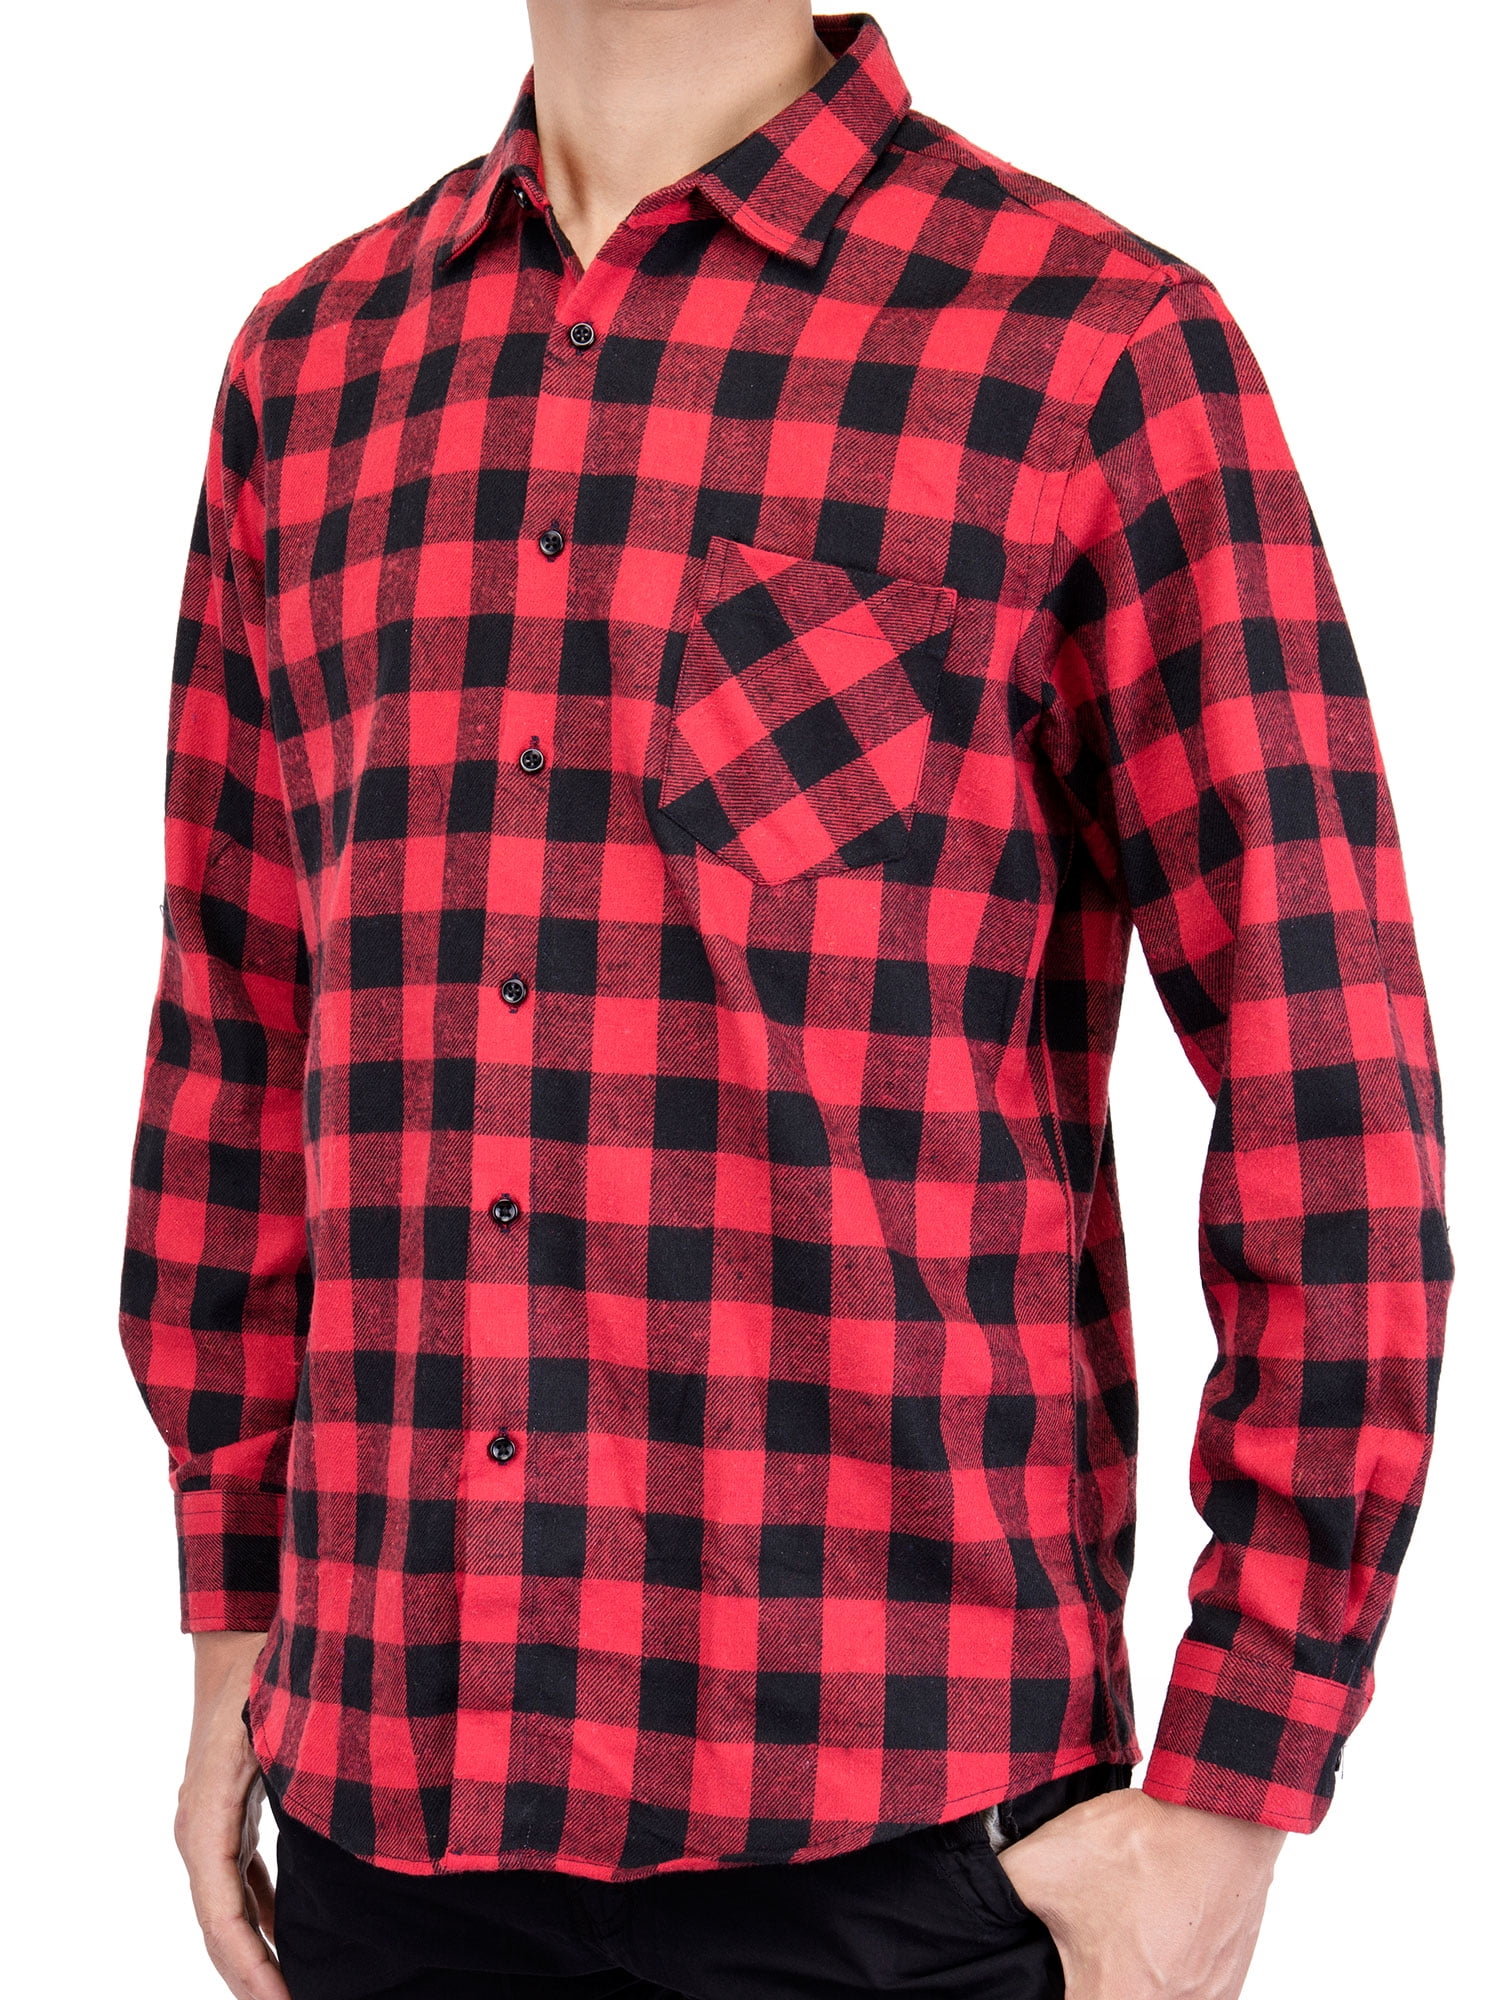 JIAER Men's Button Down Long Sleeve Flannel Plaid Casual Shirt 